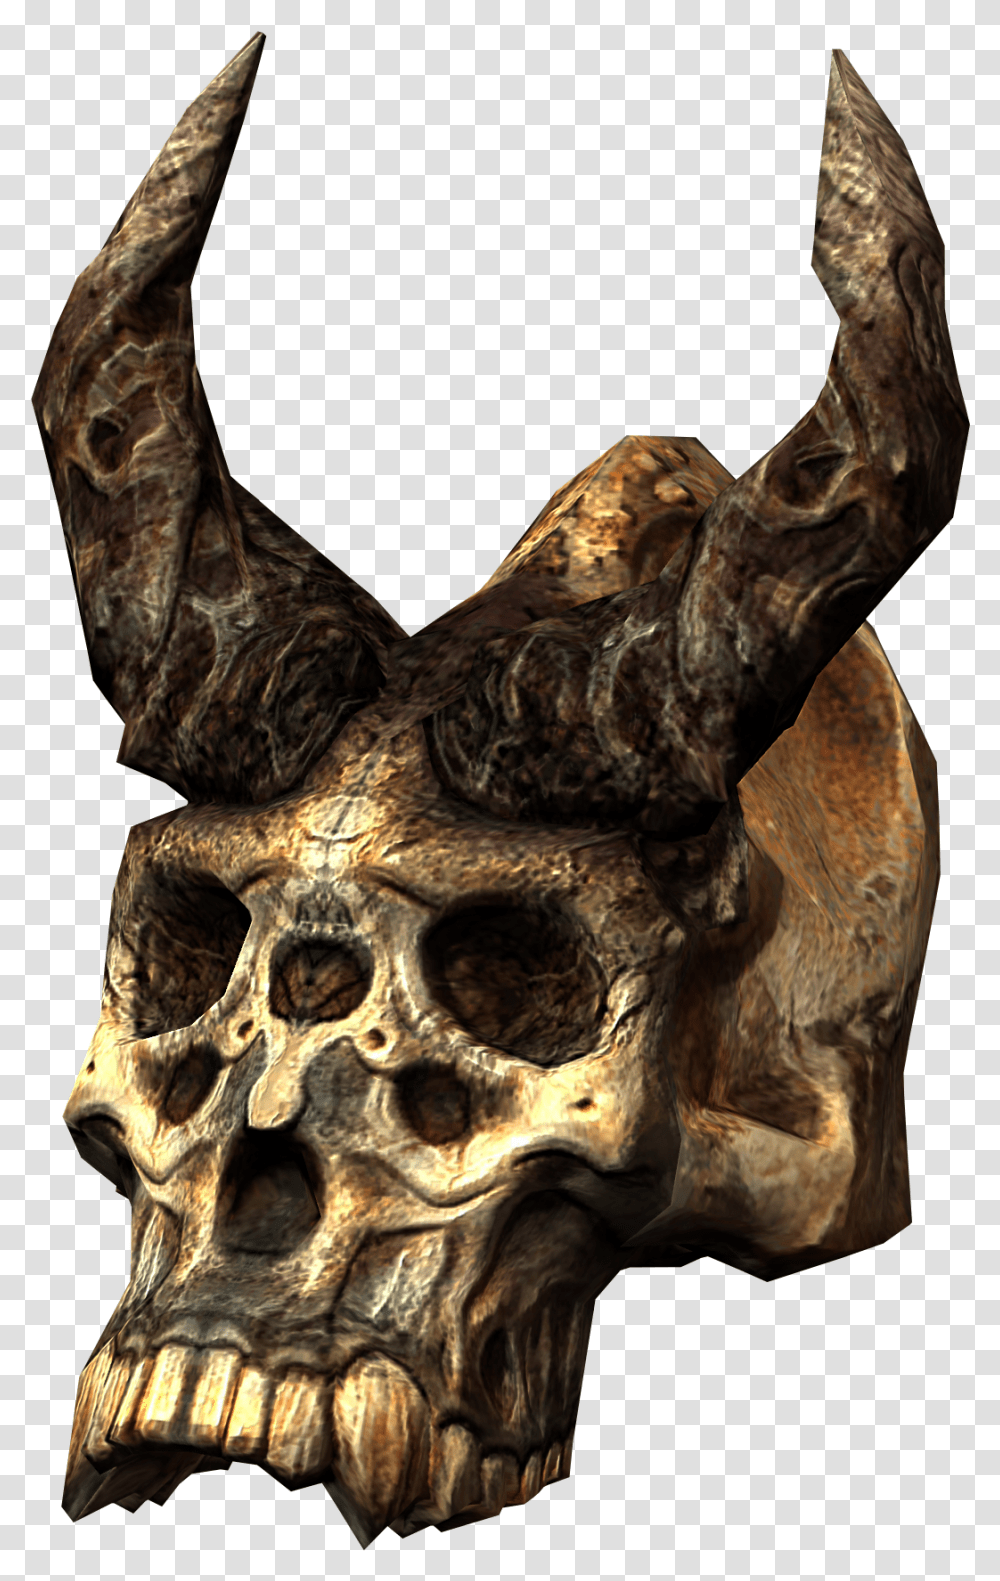 Skull Elder Scrolls Fandom Skyrim Dragon Skull, Ornament, Statue, Sculpture, Art Transparent Png